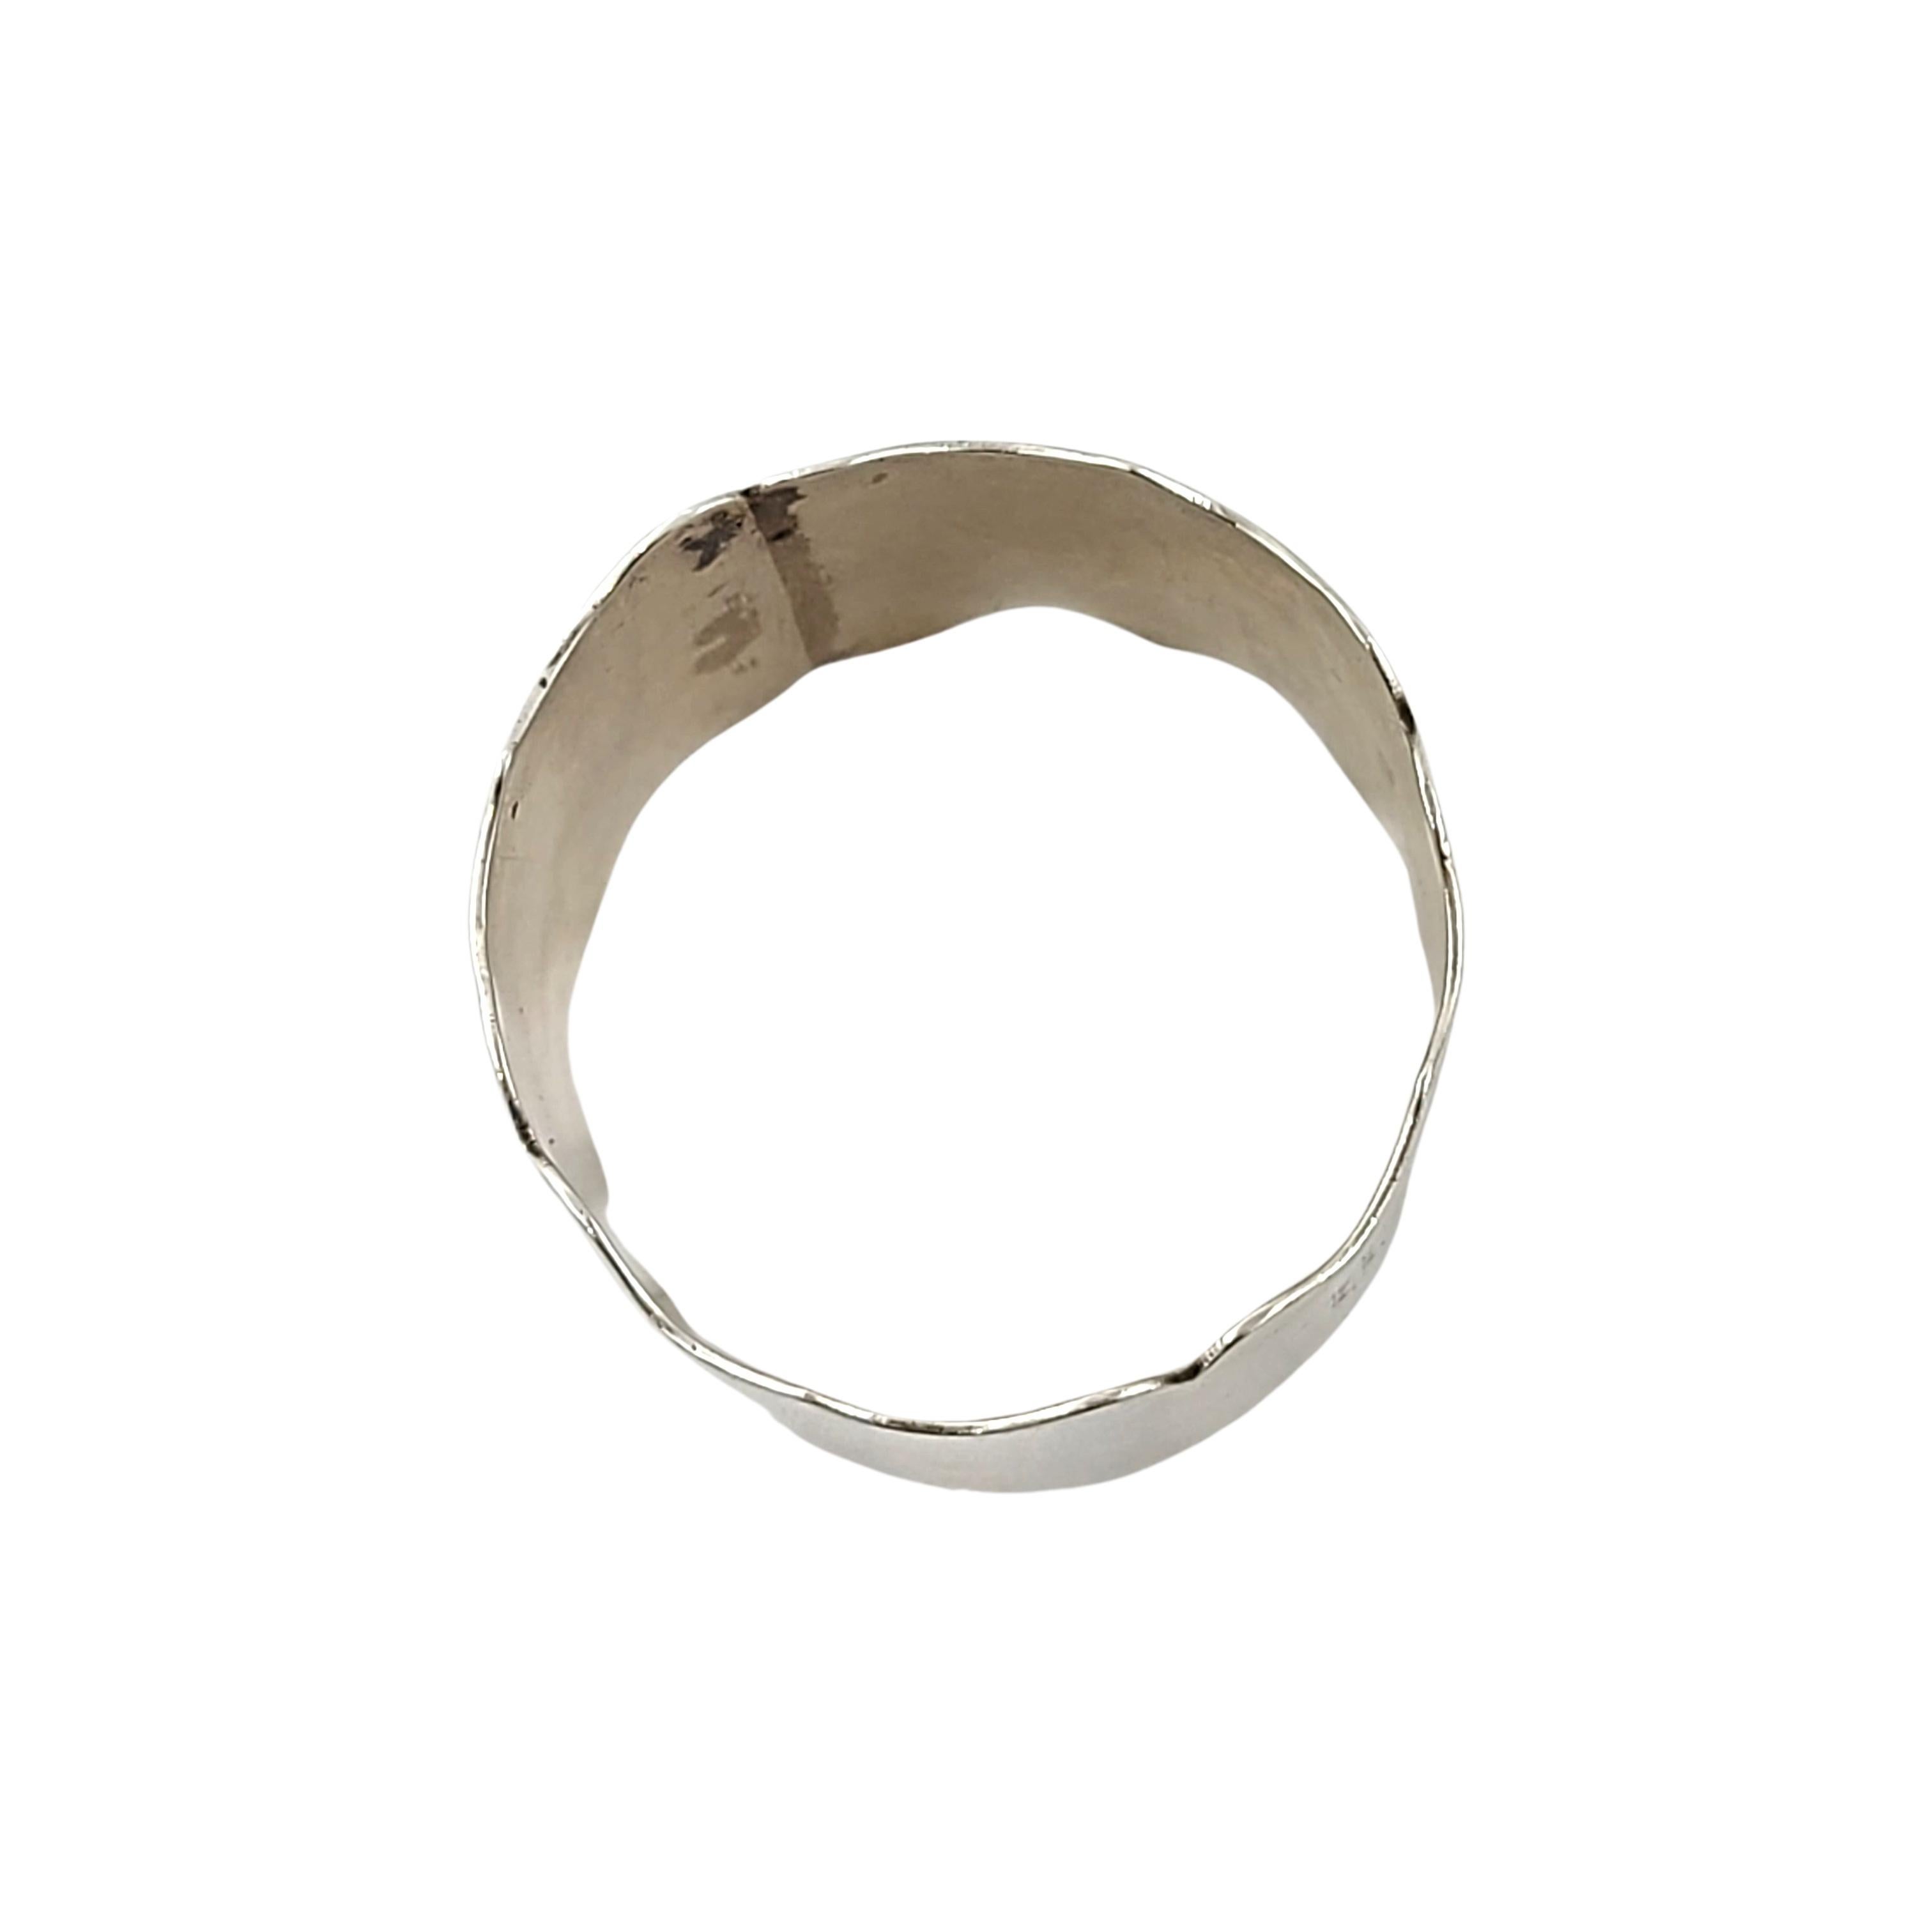 Richard Richardson Sheffield Sterling Silver Napkin Ring with Monogram For Sale 2